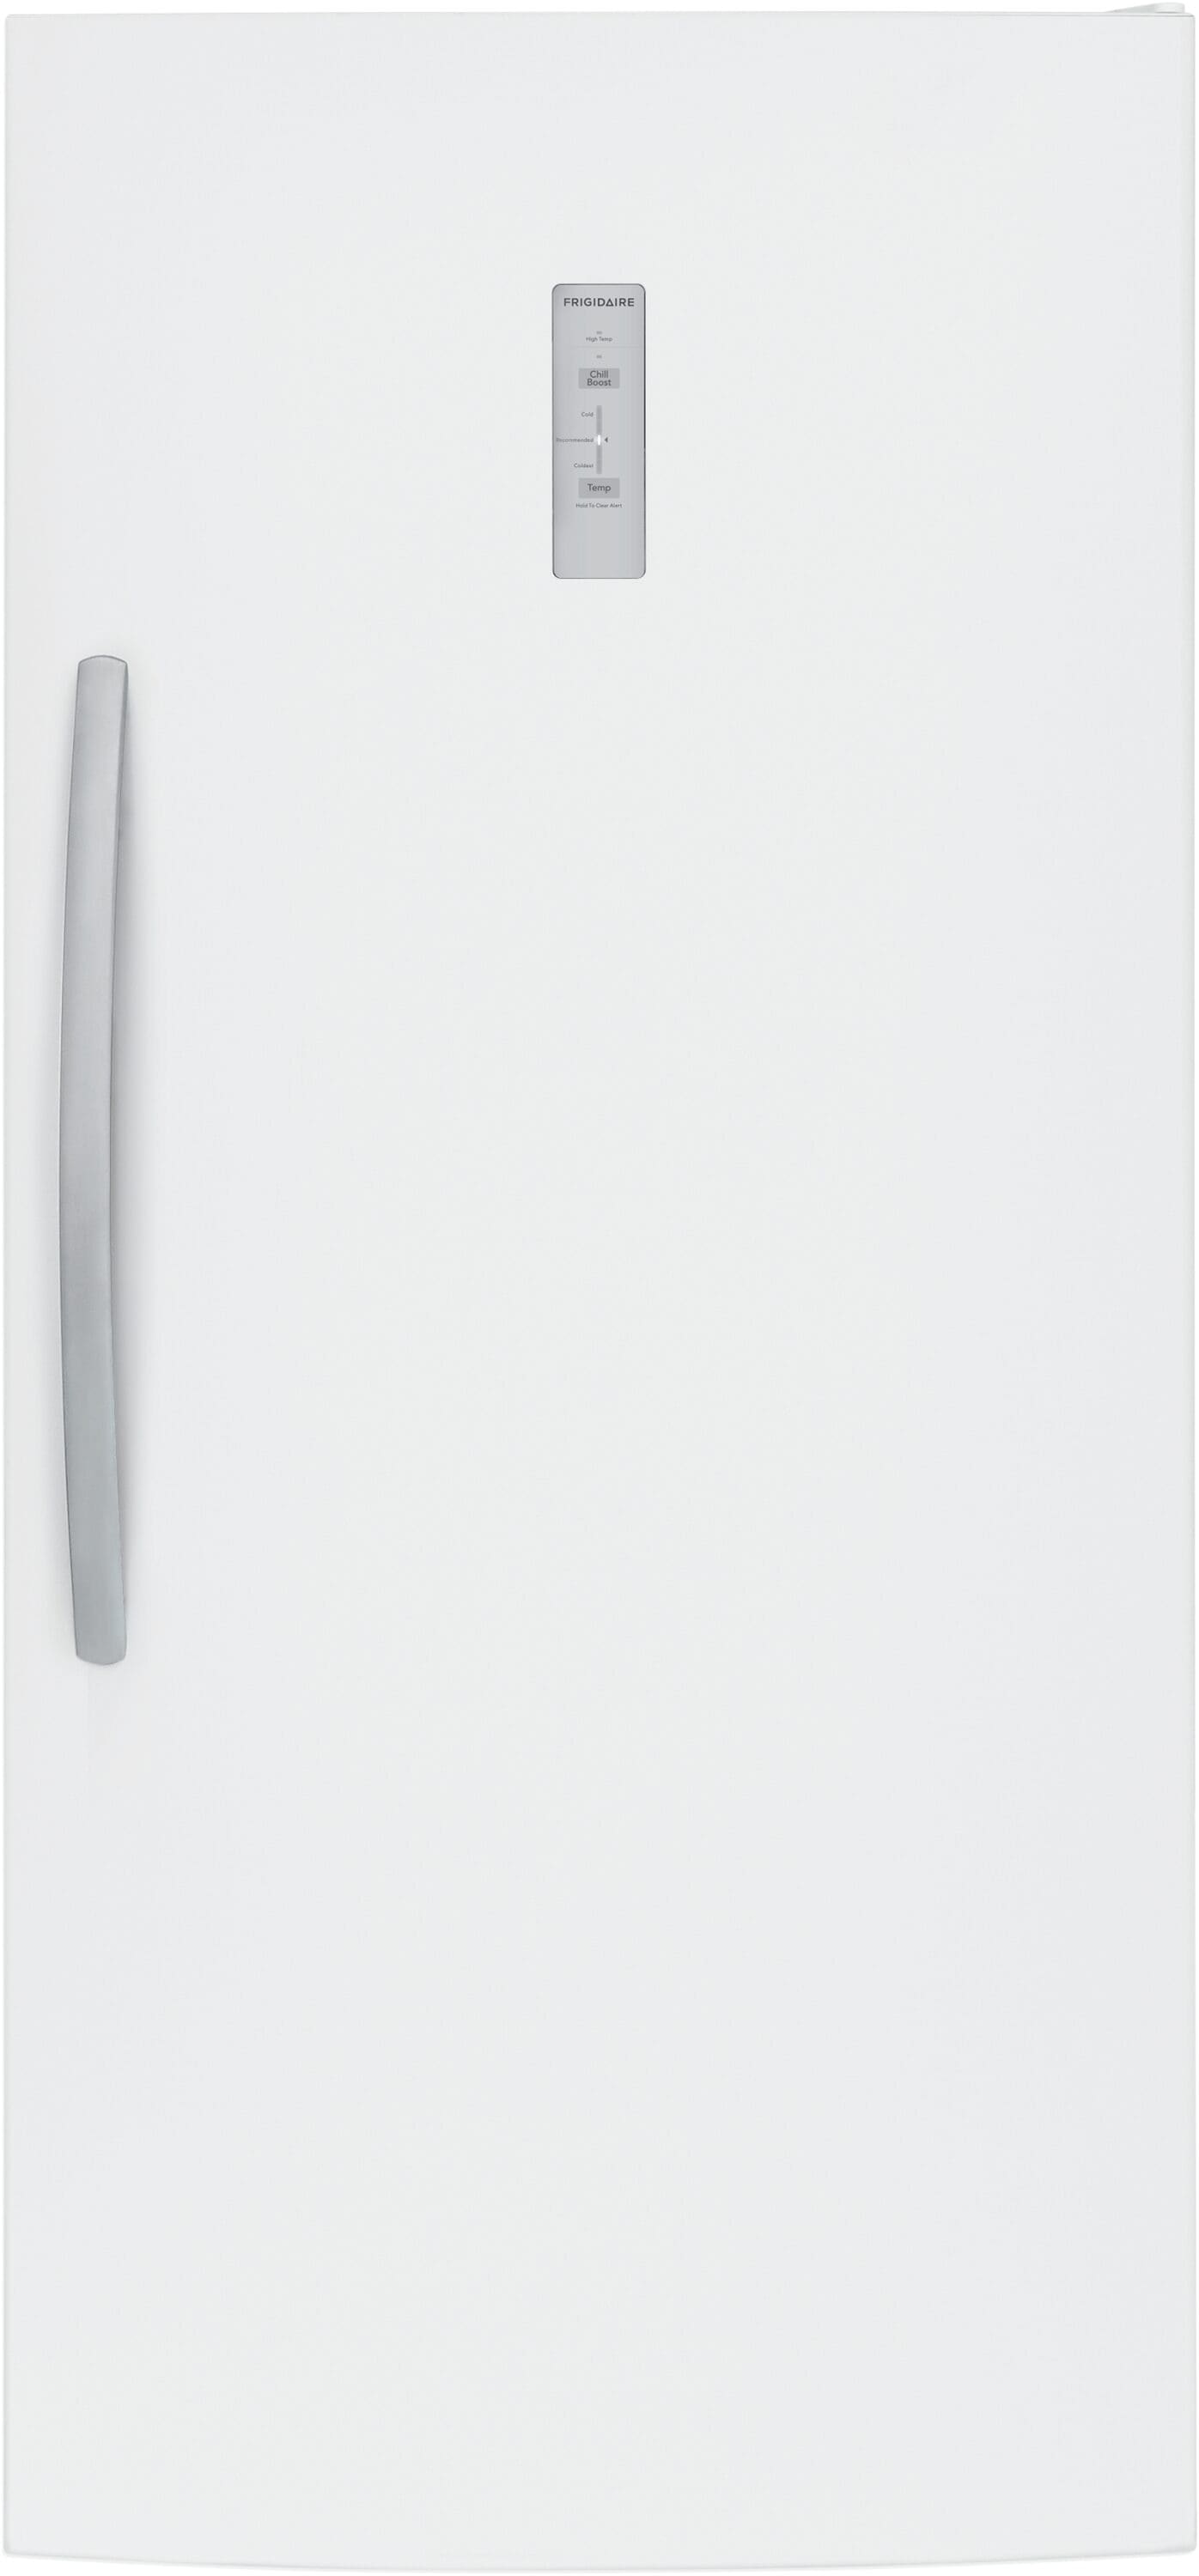 Frigidaire 20-cu ft Freezerless Refrigerator (White) ENERGY STAR in the ...